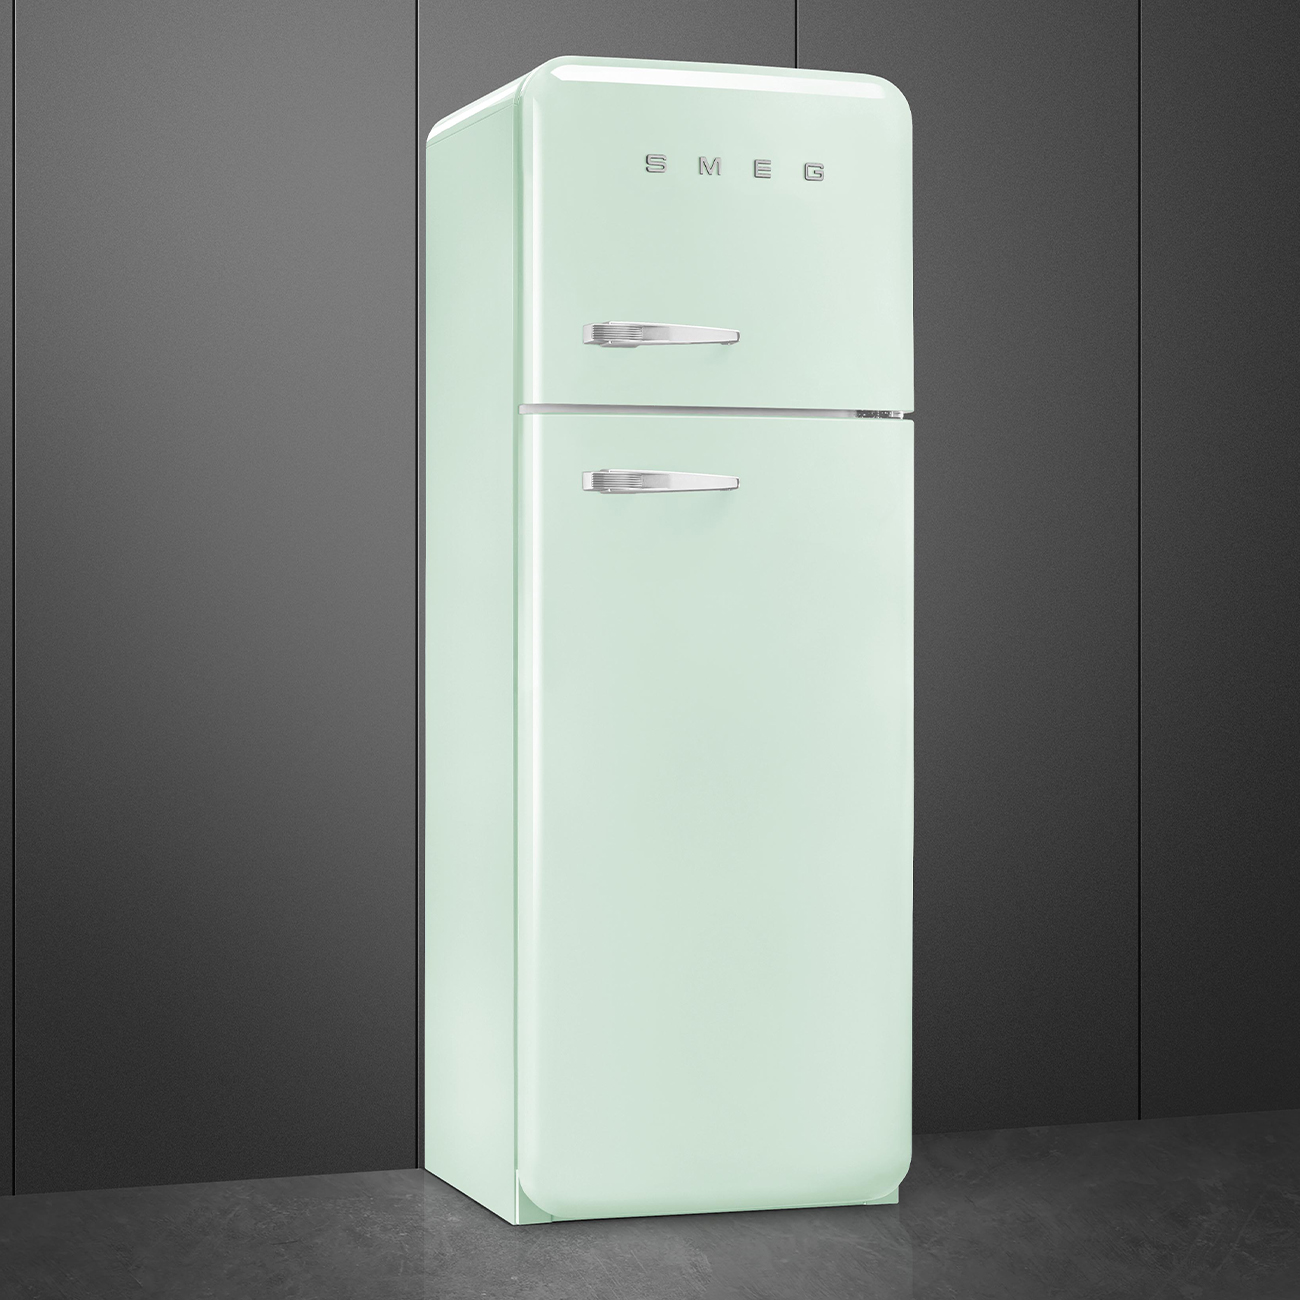 Pastel green refrigerator - Smeg_3